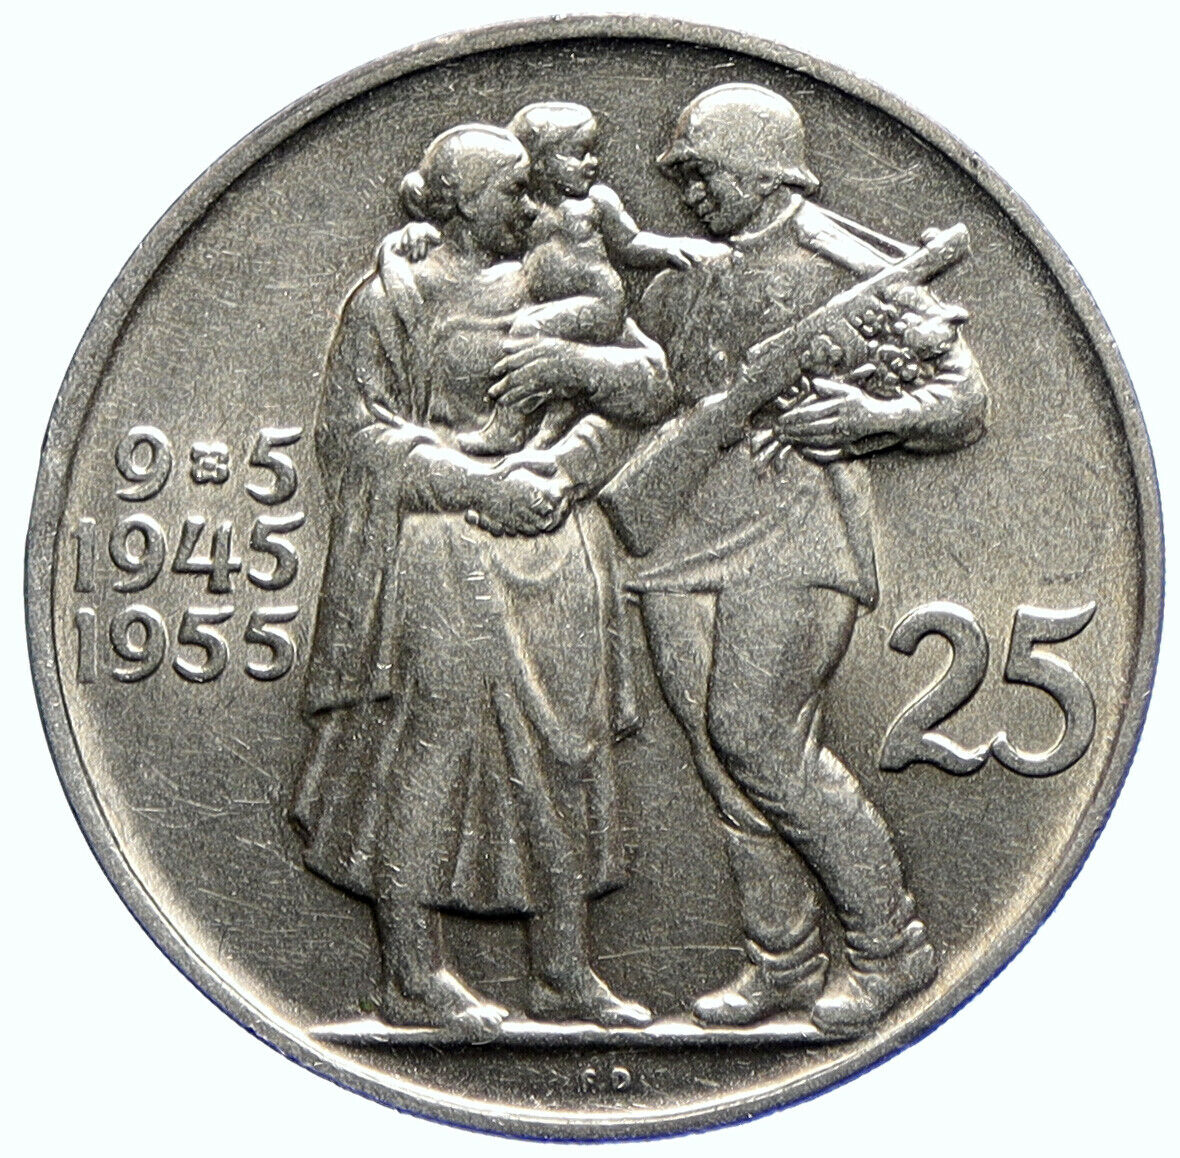 1955 CZECHOSLOVAKIA Czech Soldier Family LIBERATION Silver 25 Korun Coin i104748